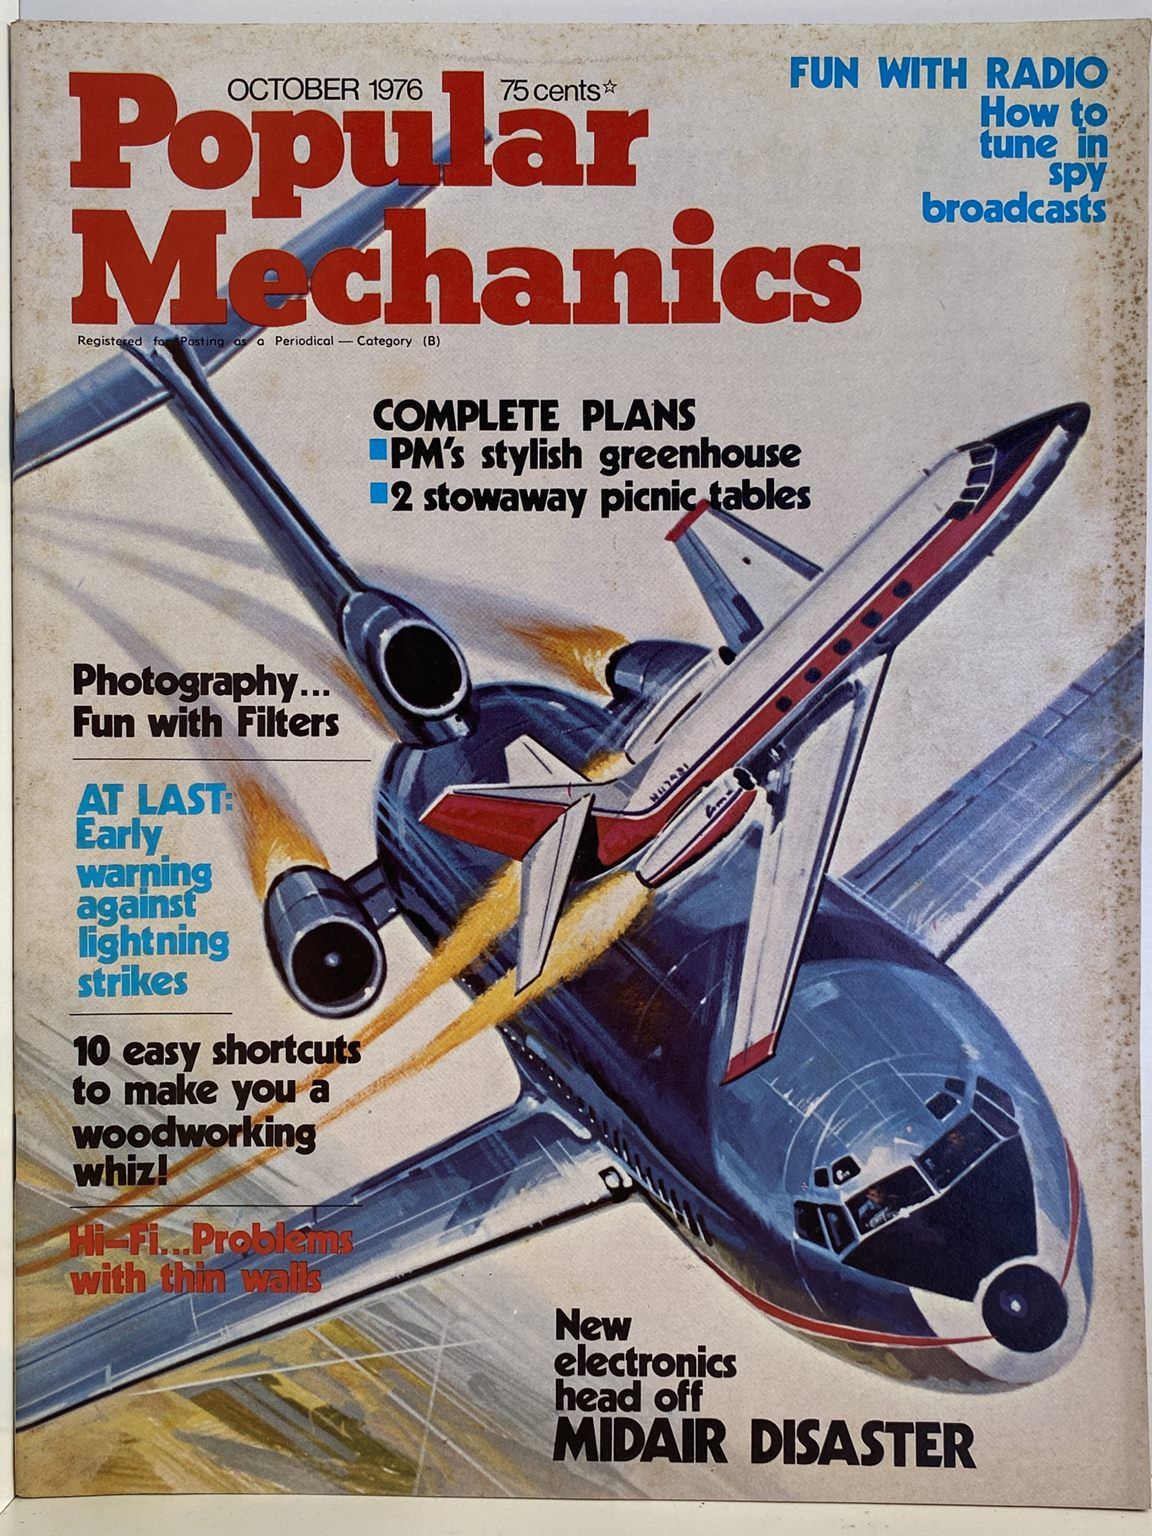 VINTAGE MAGAZINE: Popular Mechanics - Vol. 145, No. 10 - October 1976